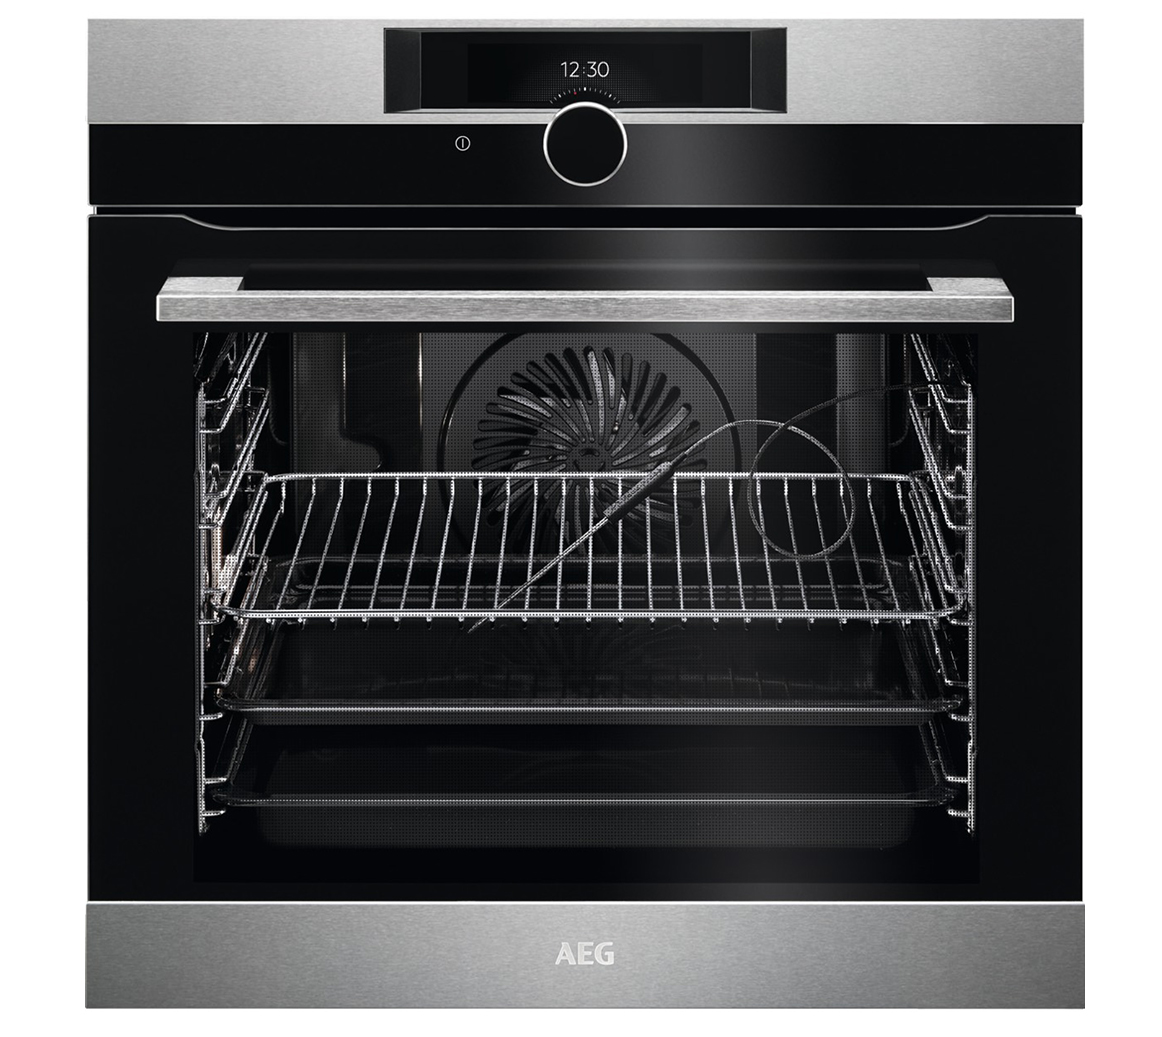 AEG（アーエーゲー）の電気オーブン［BPK947730M］のイメージ